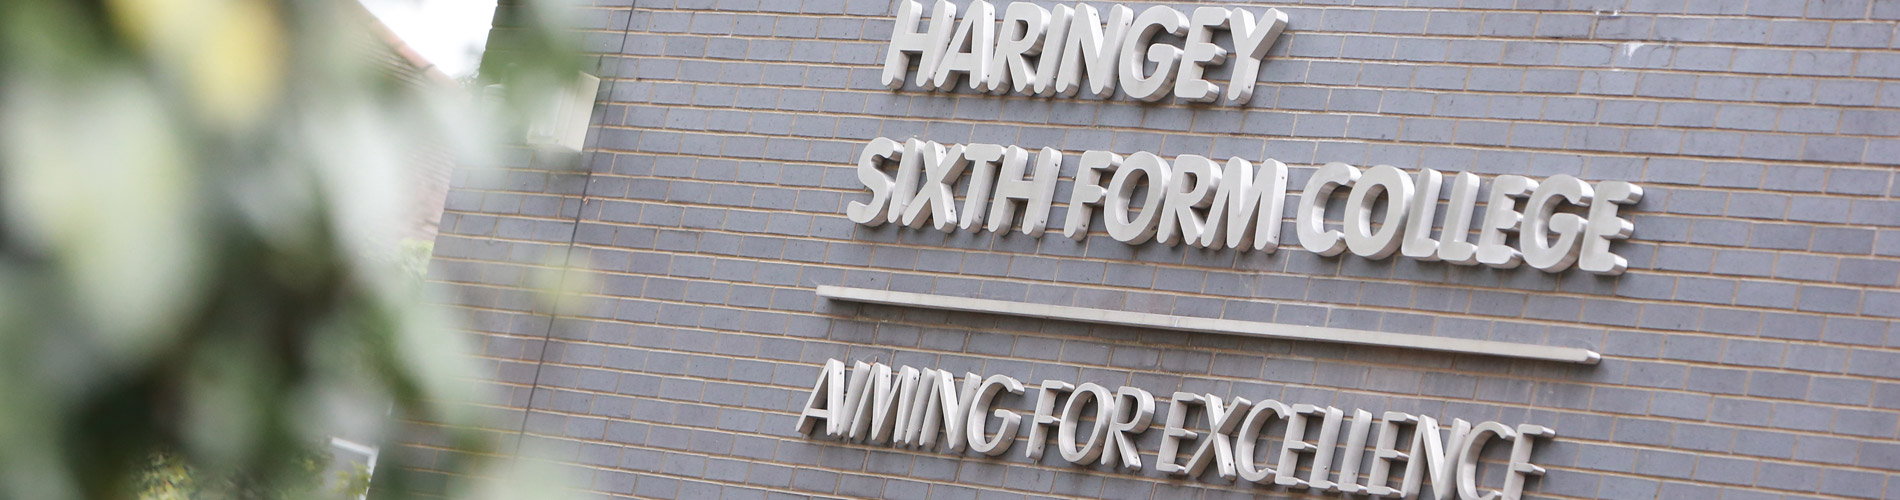 Haringey Sixth Form College